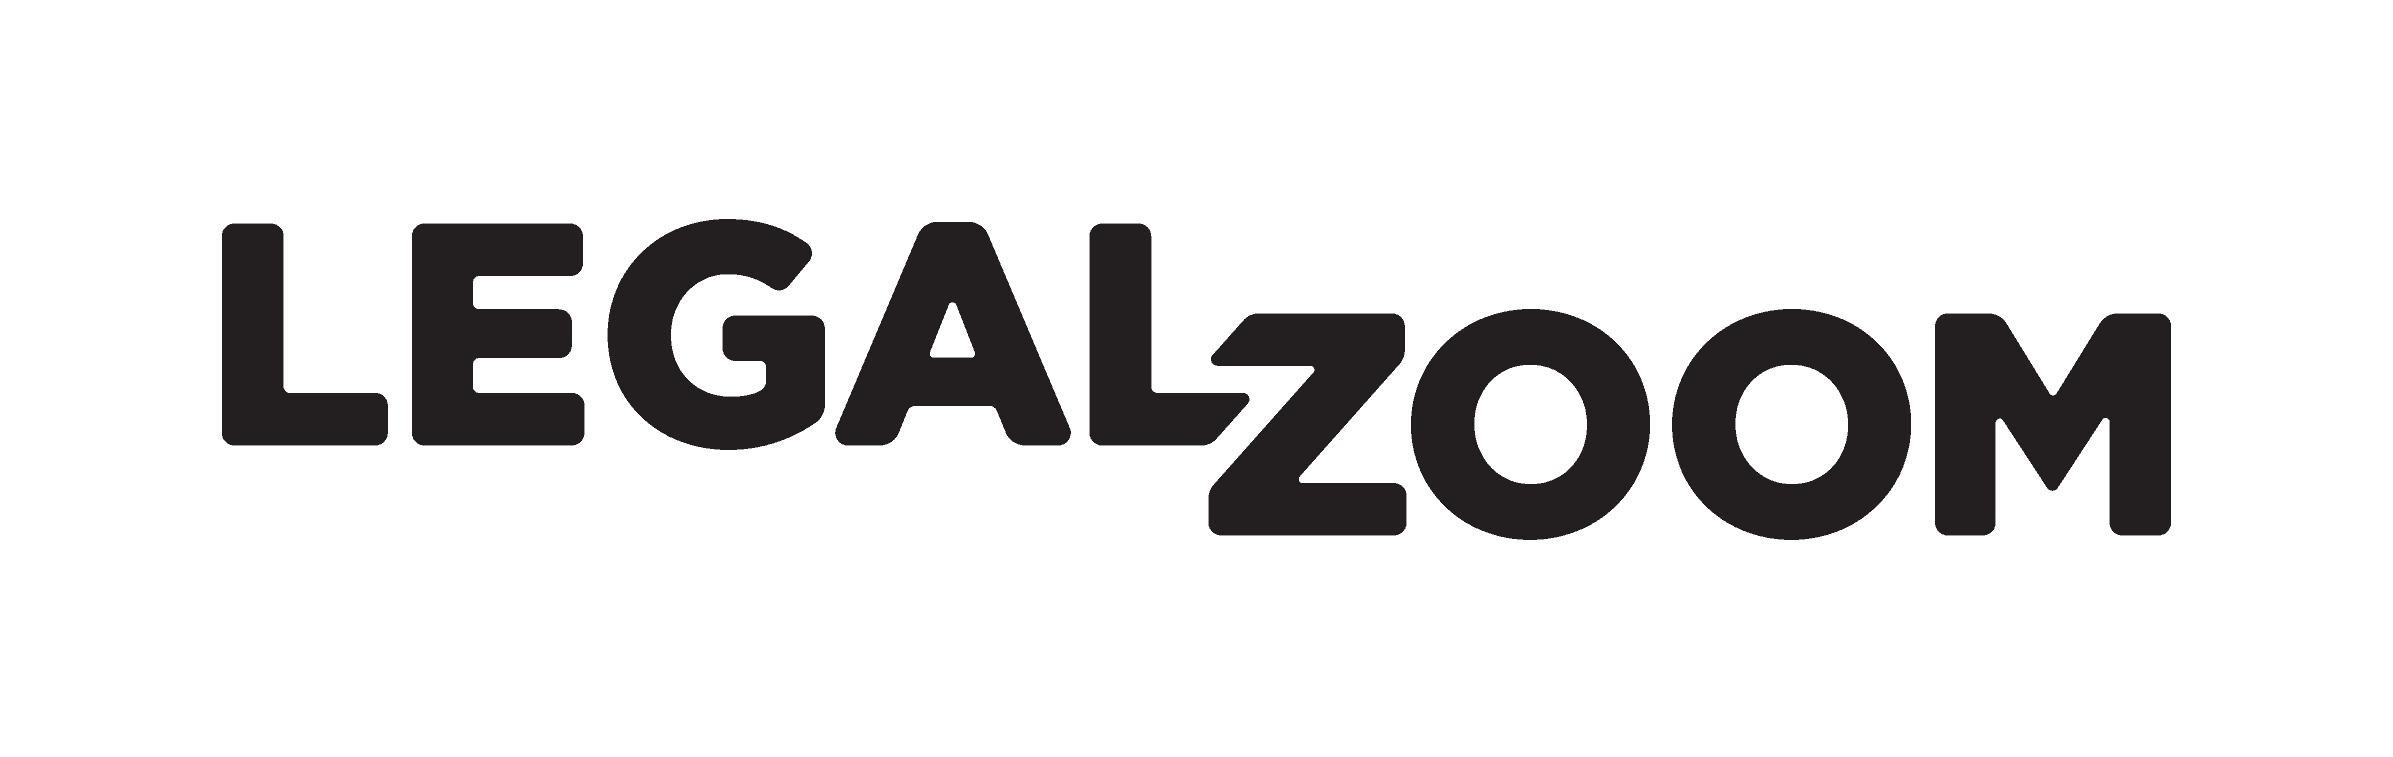 LegalZoom_Logo